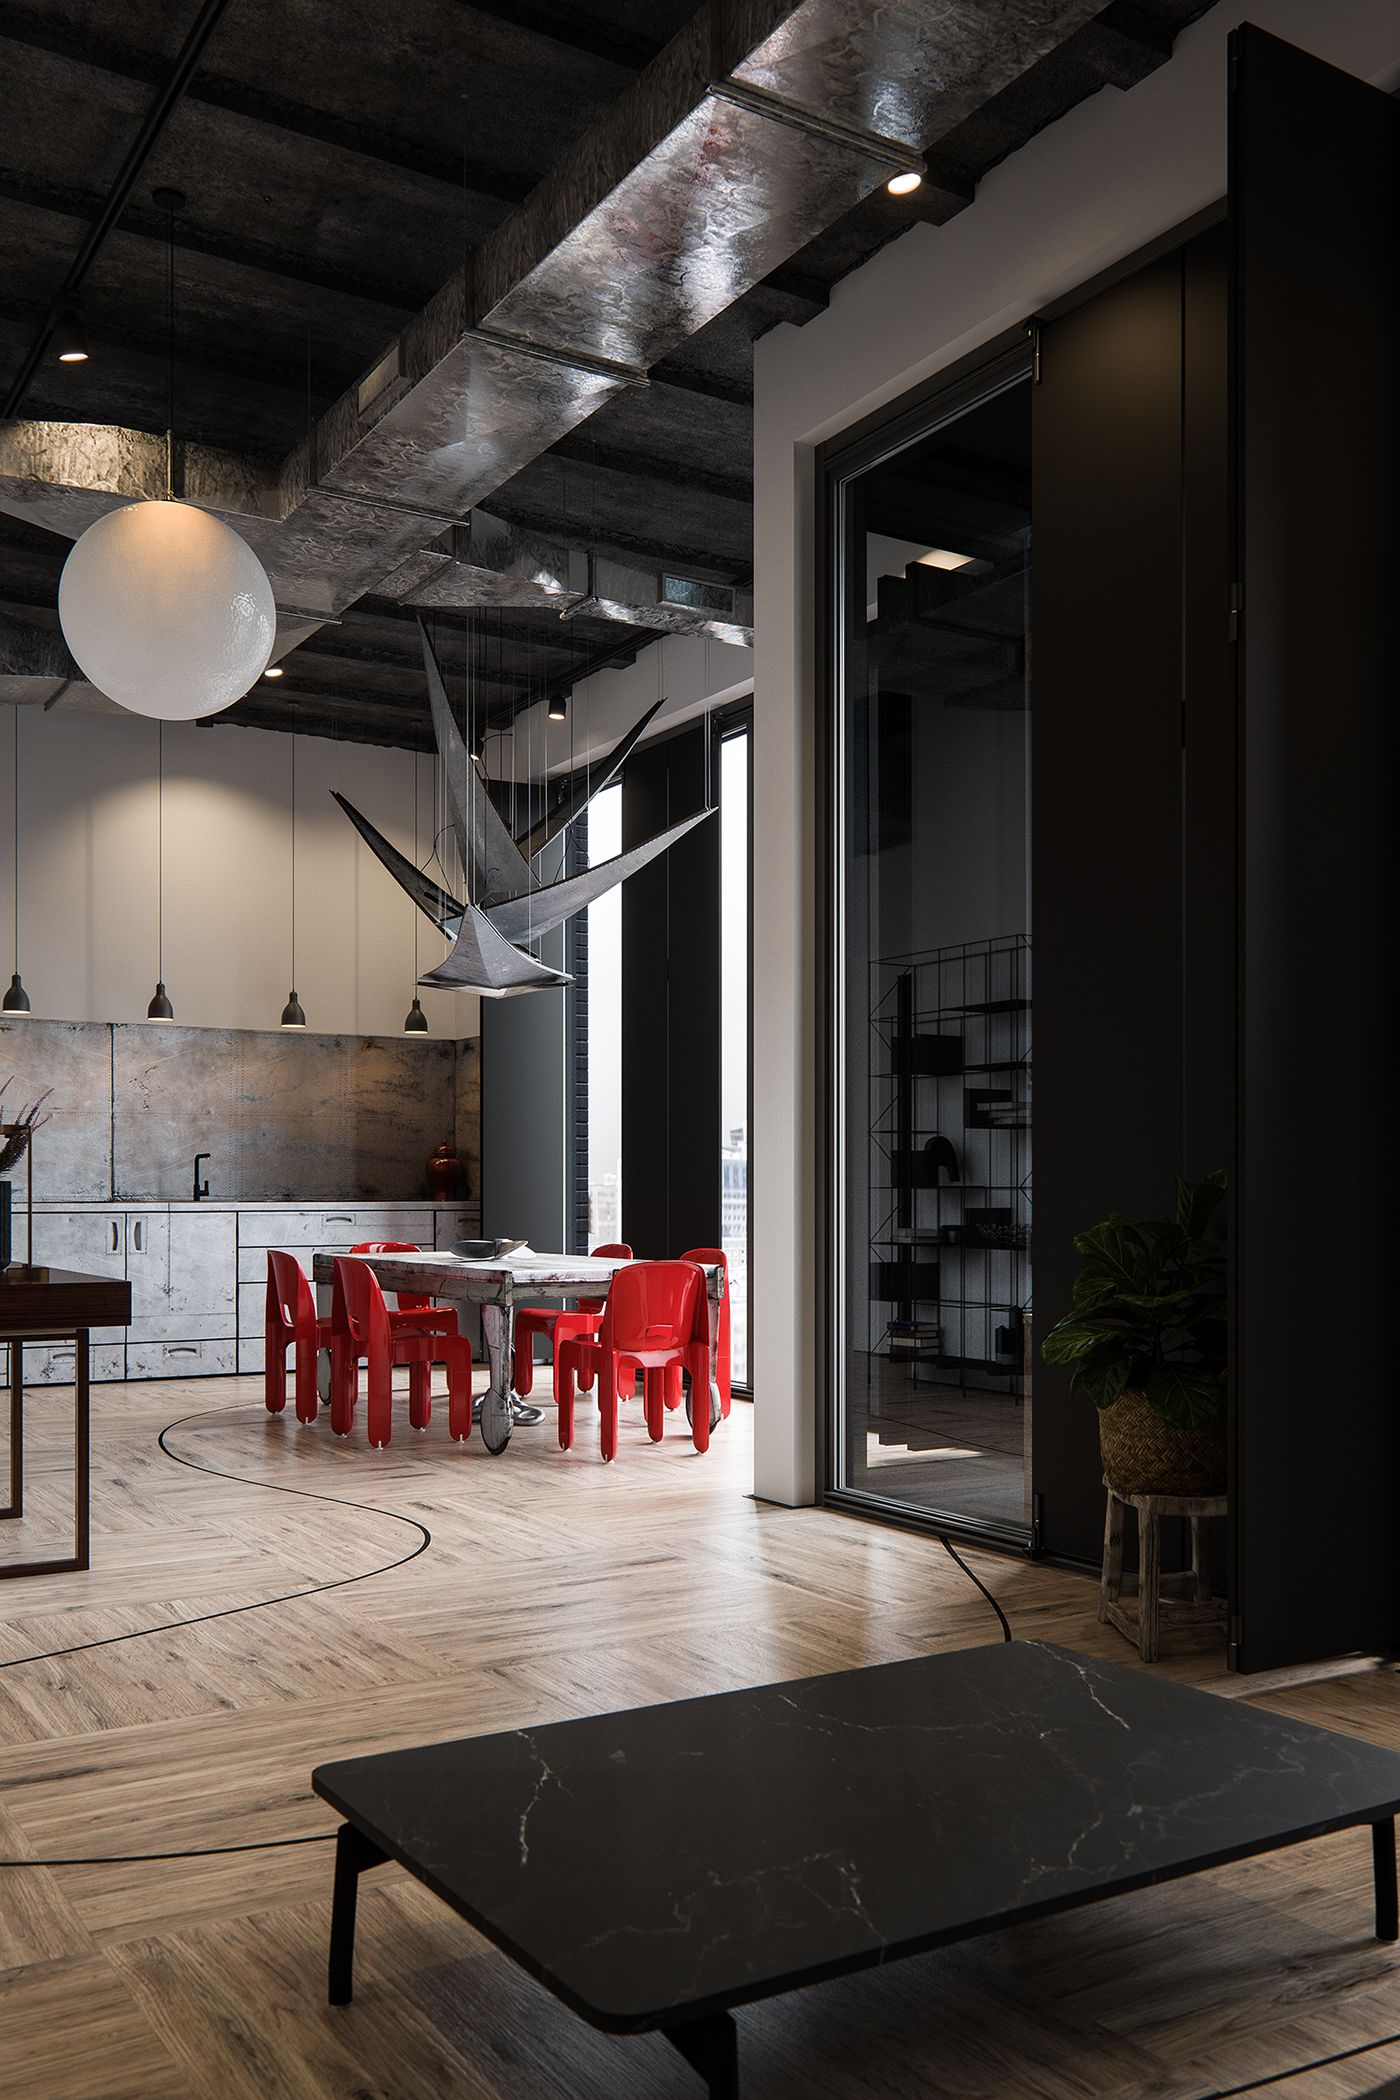 design Interior penthouse living room kitchen bedroom vray 3D rendered New York